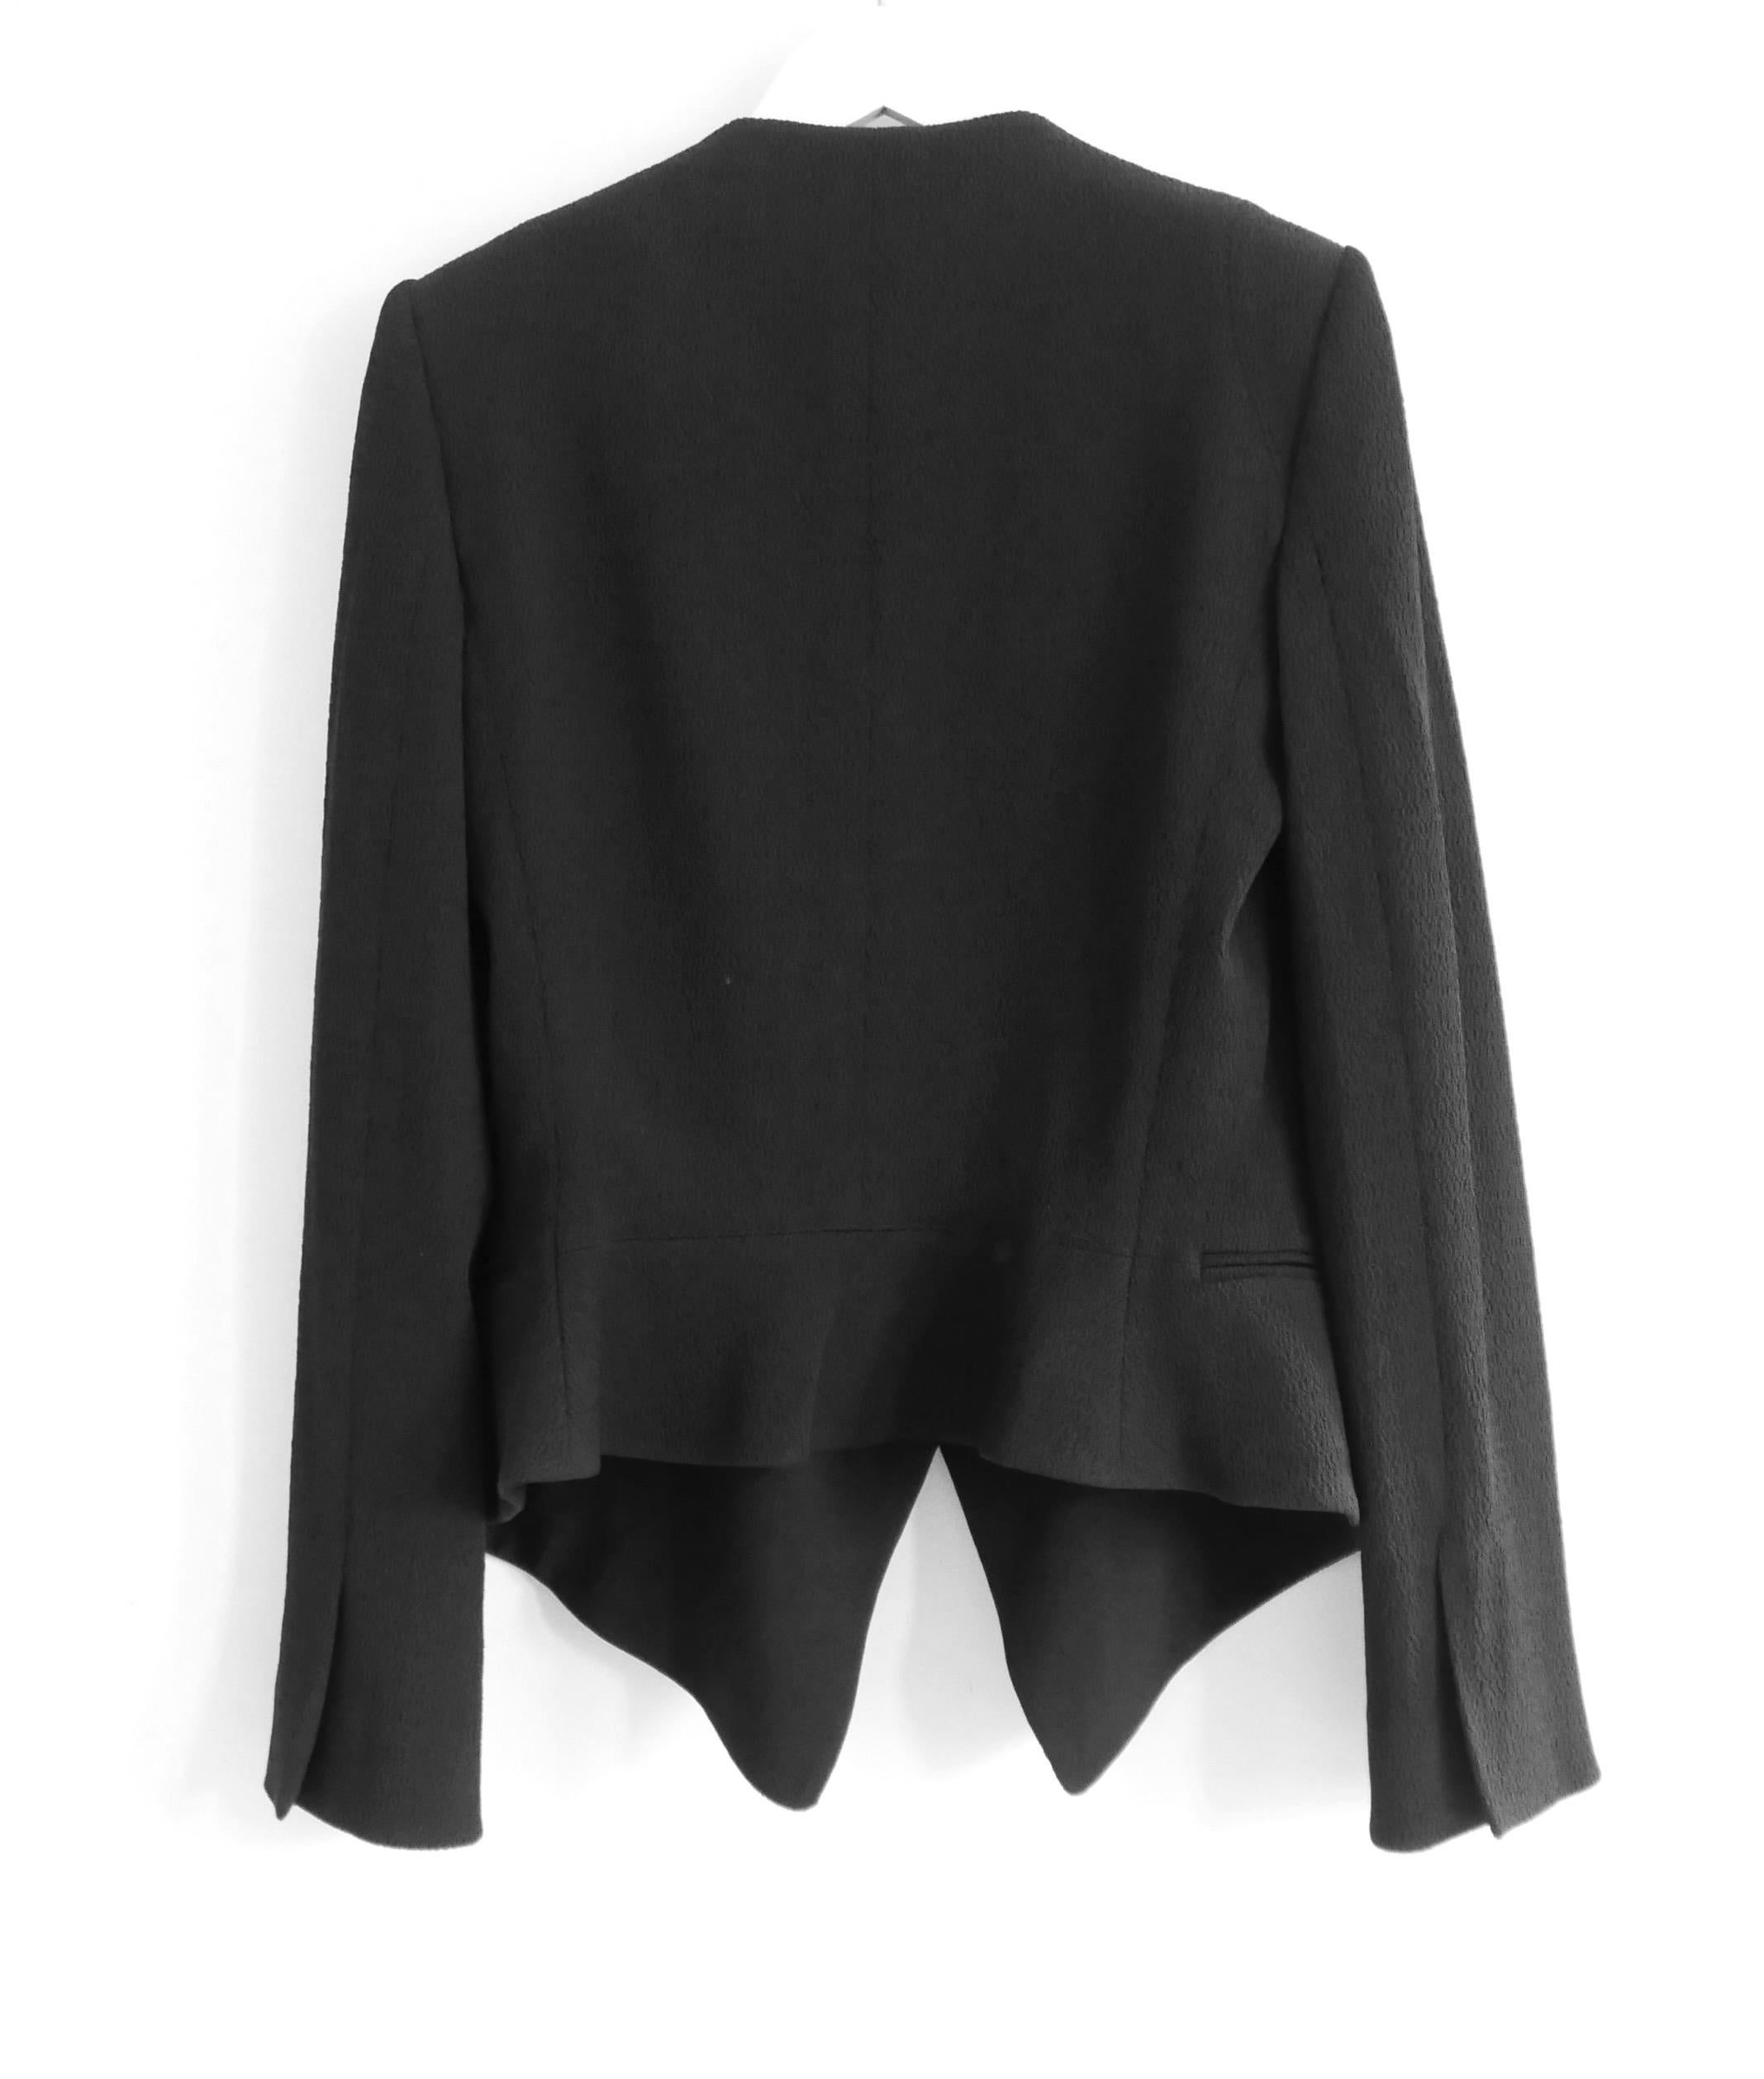 Chloe black textured tuxedo inspired jacket blazer 1